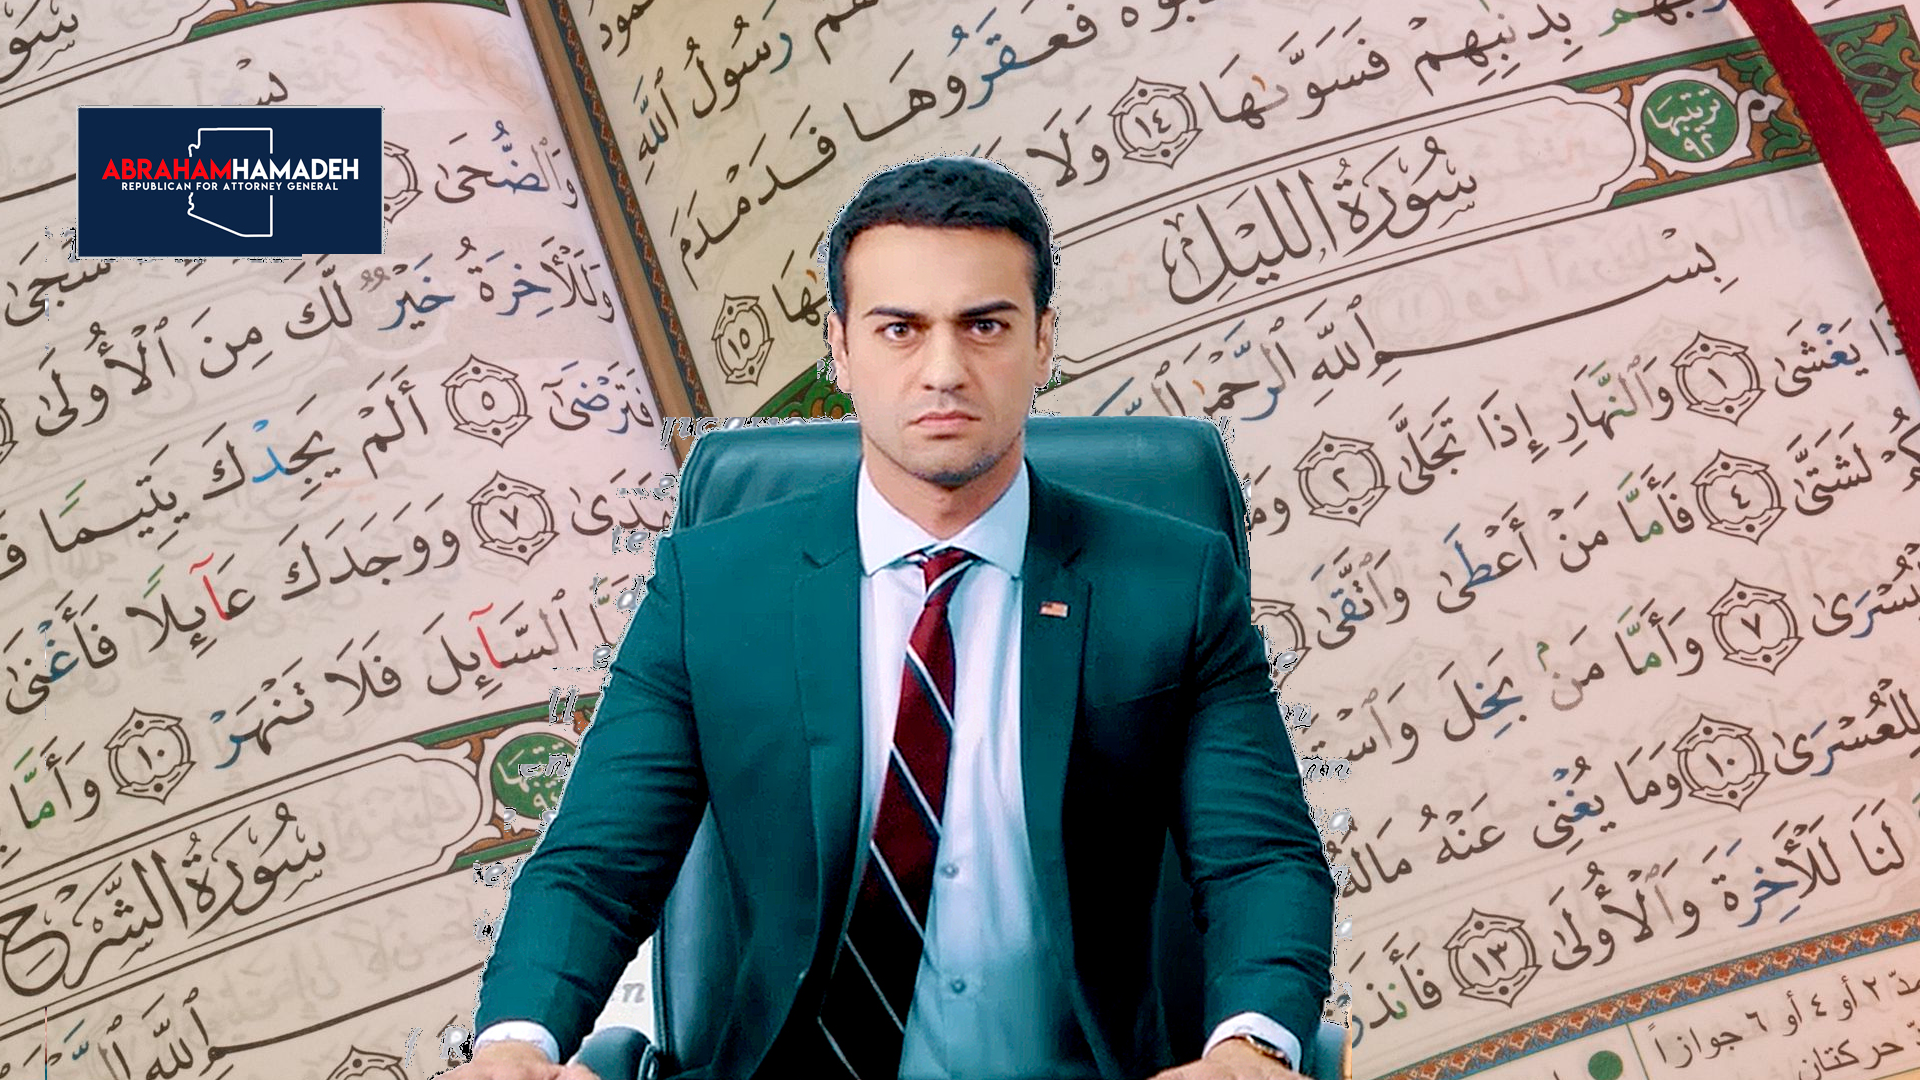 Abraham Hamadeh Muslim Arizona Attorney General Quran